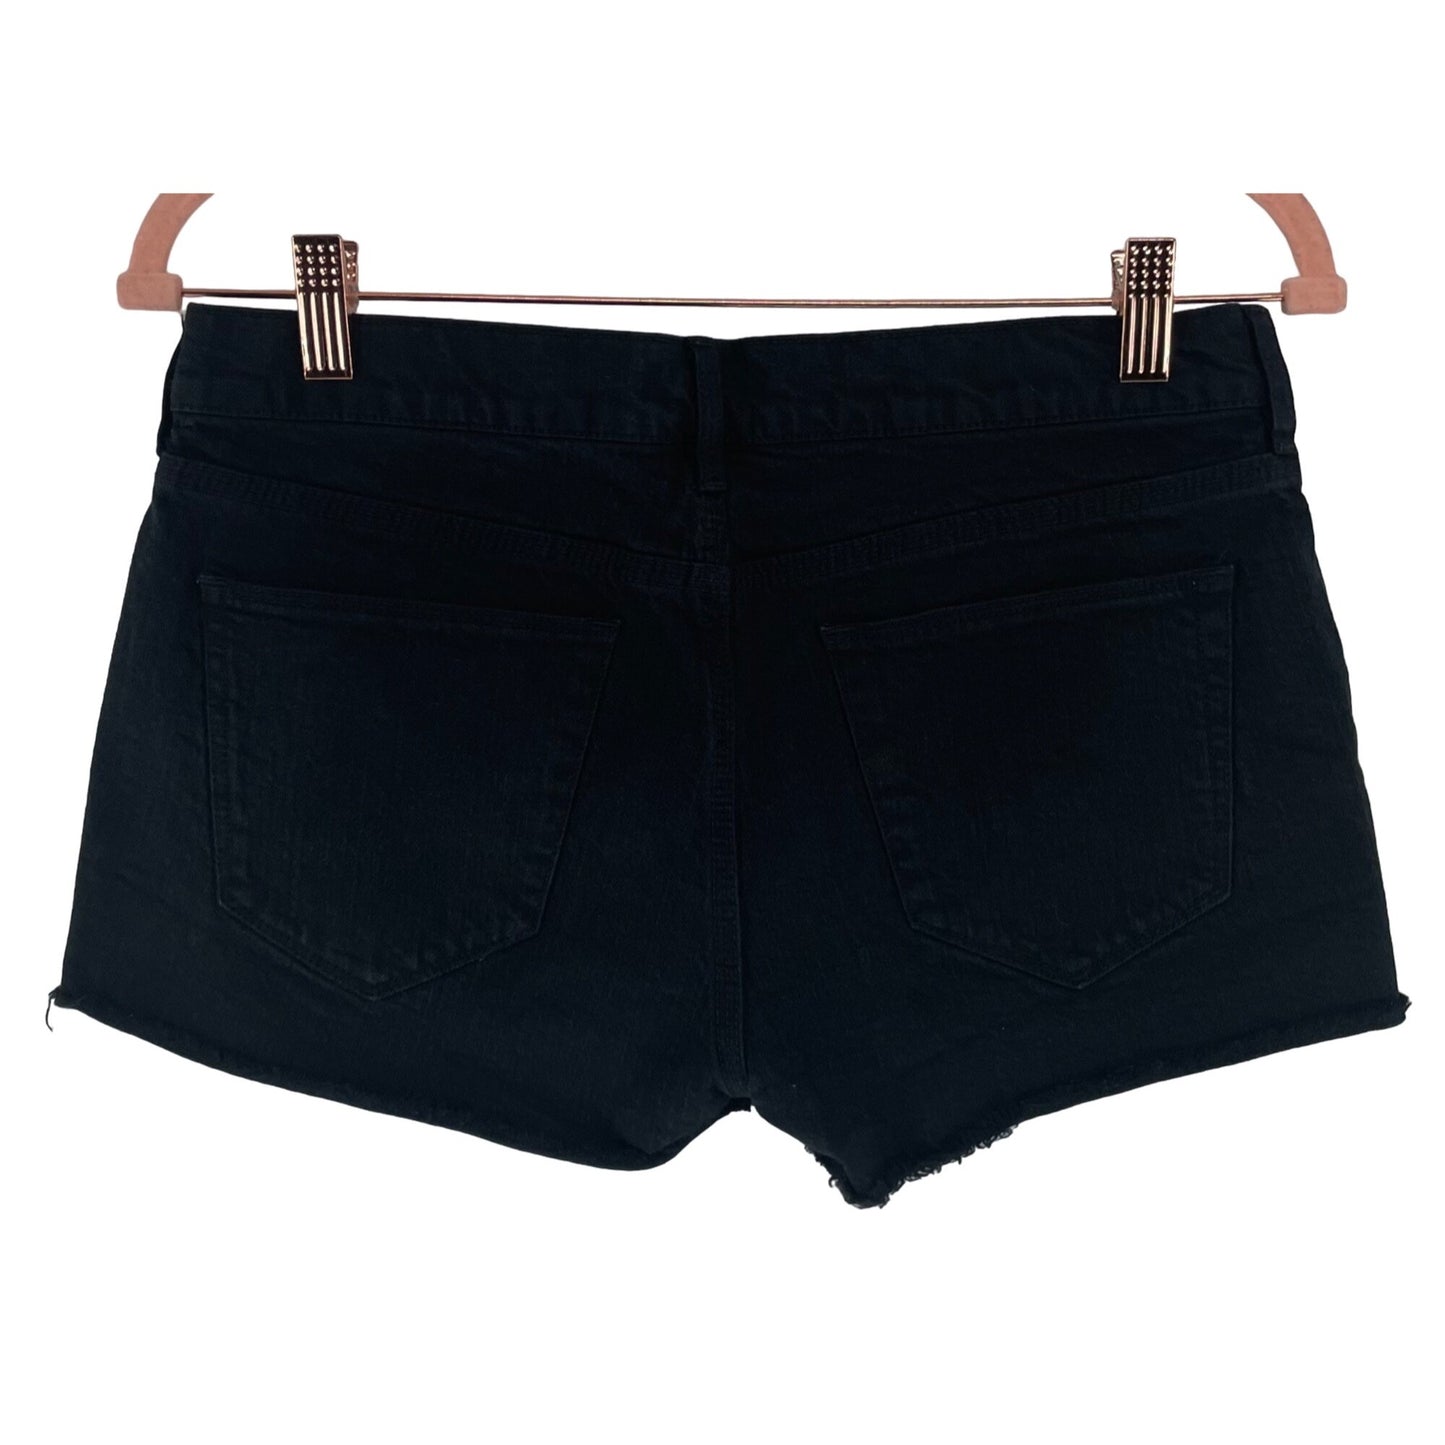 Madewell Women's Size 27 Black Denim Fringe Hem Shorts